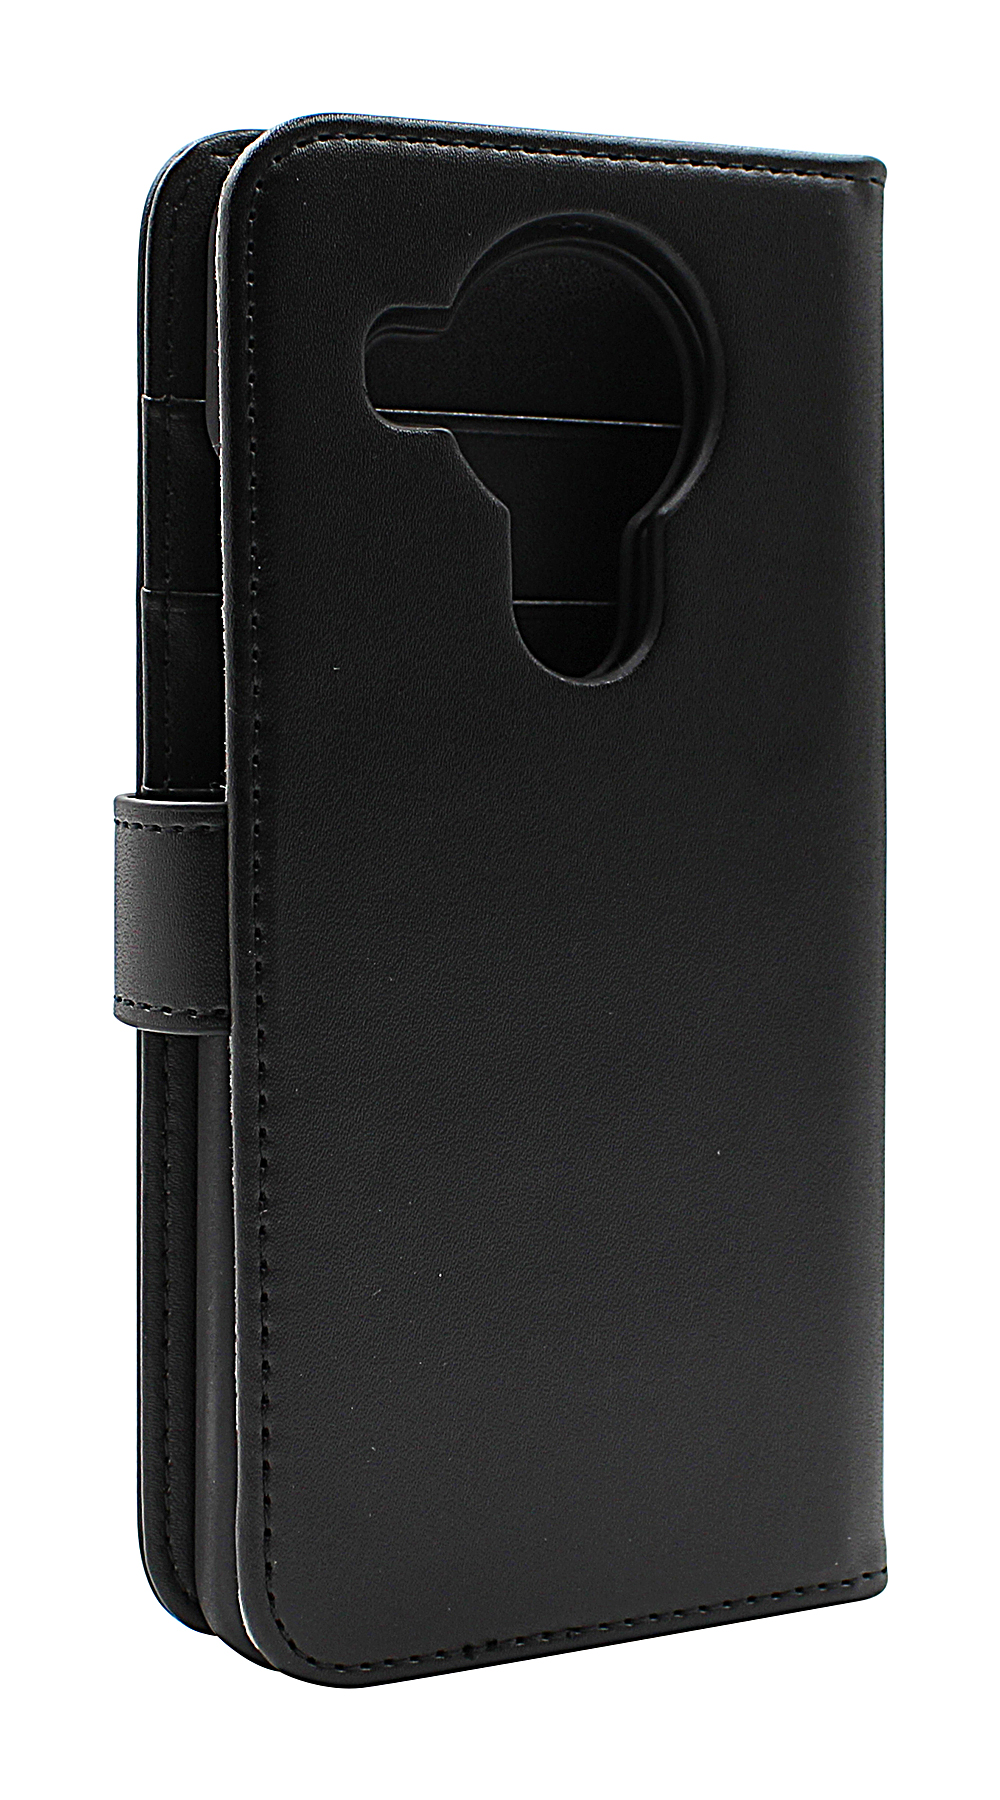 Skimblocker Magnet Wallet Nokia 5.4